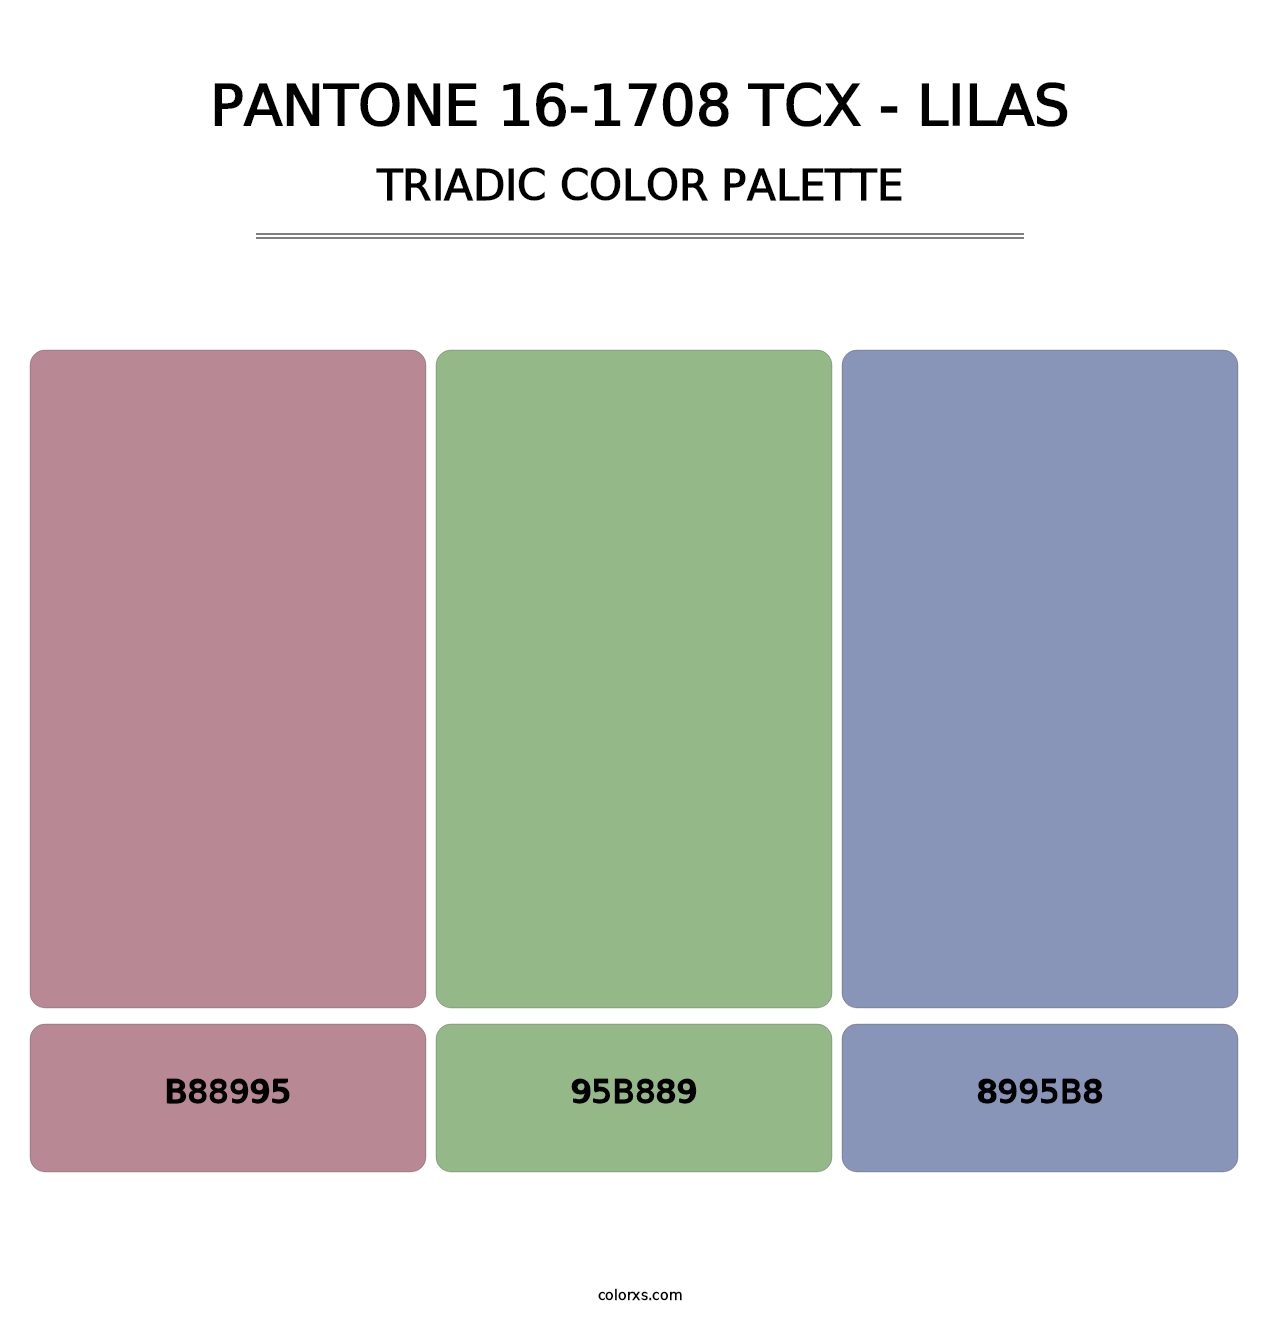 PANTONE 16-1708 TCX - Lilas - Triadic Color Palette